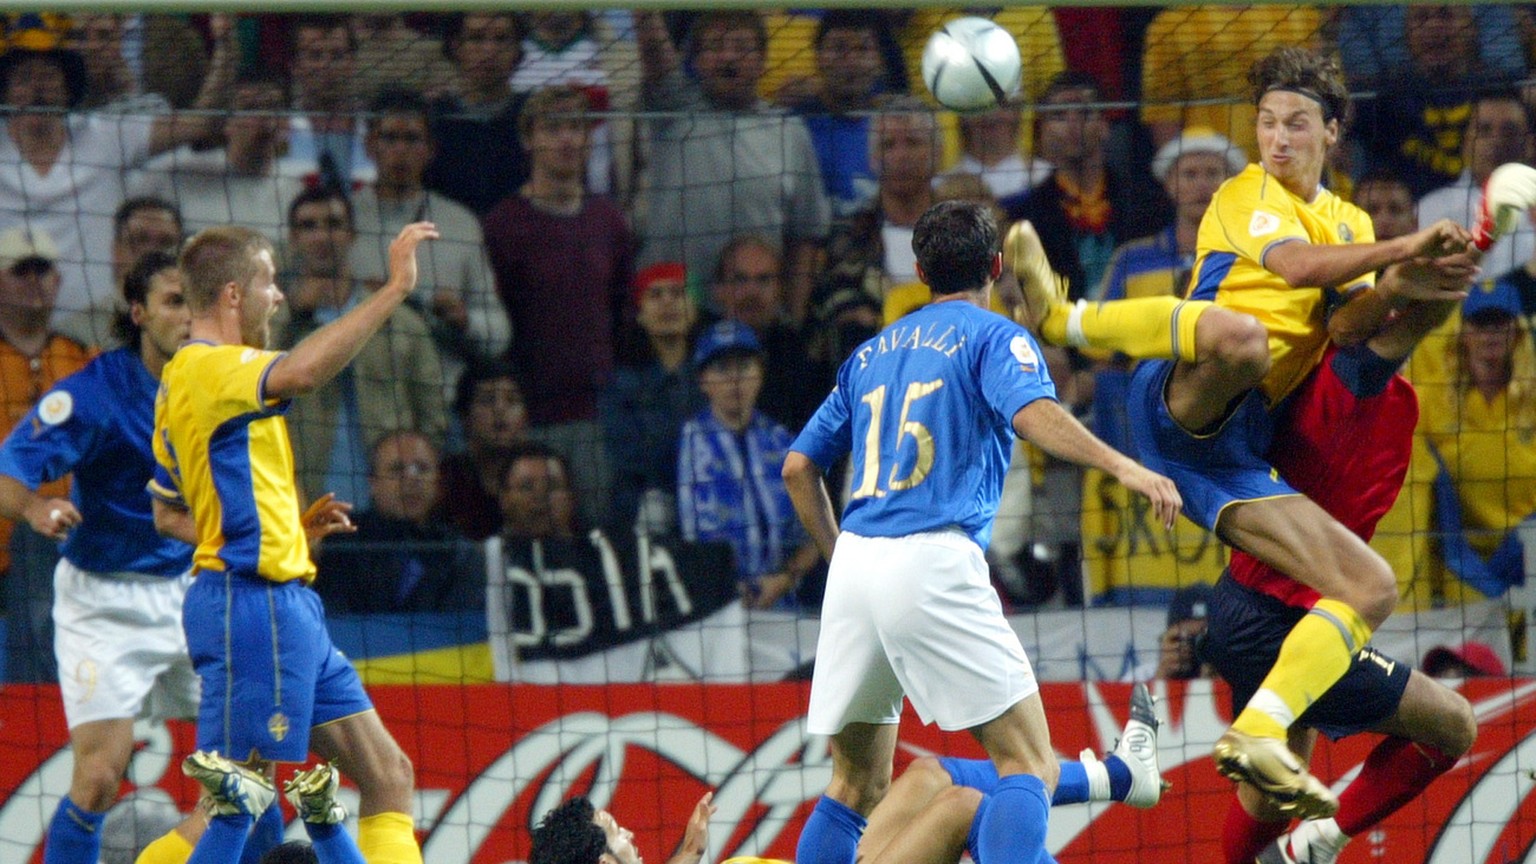 JAHRESRUECKBLICK 2004 - SPORT - AKROBATISCHES TOR VON ZLATAN IBRAHIMOVIC: Sweden&#039;s Zlatan Ibrahimovic, second from right, scores with a back heal against Italy&#039;s goalie Gianluigi Buffon, rig ...